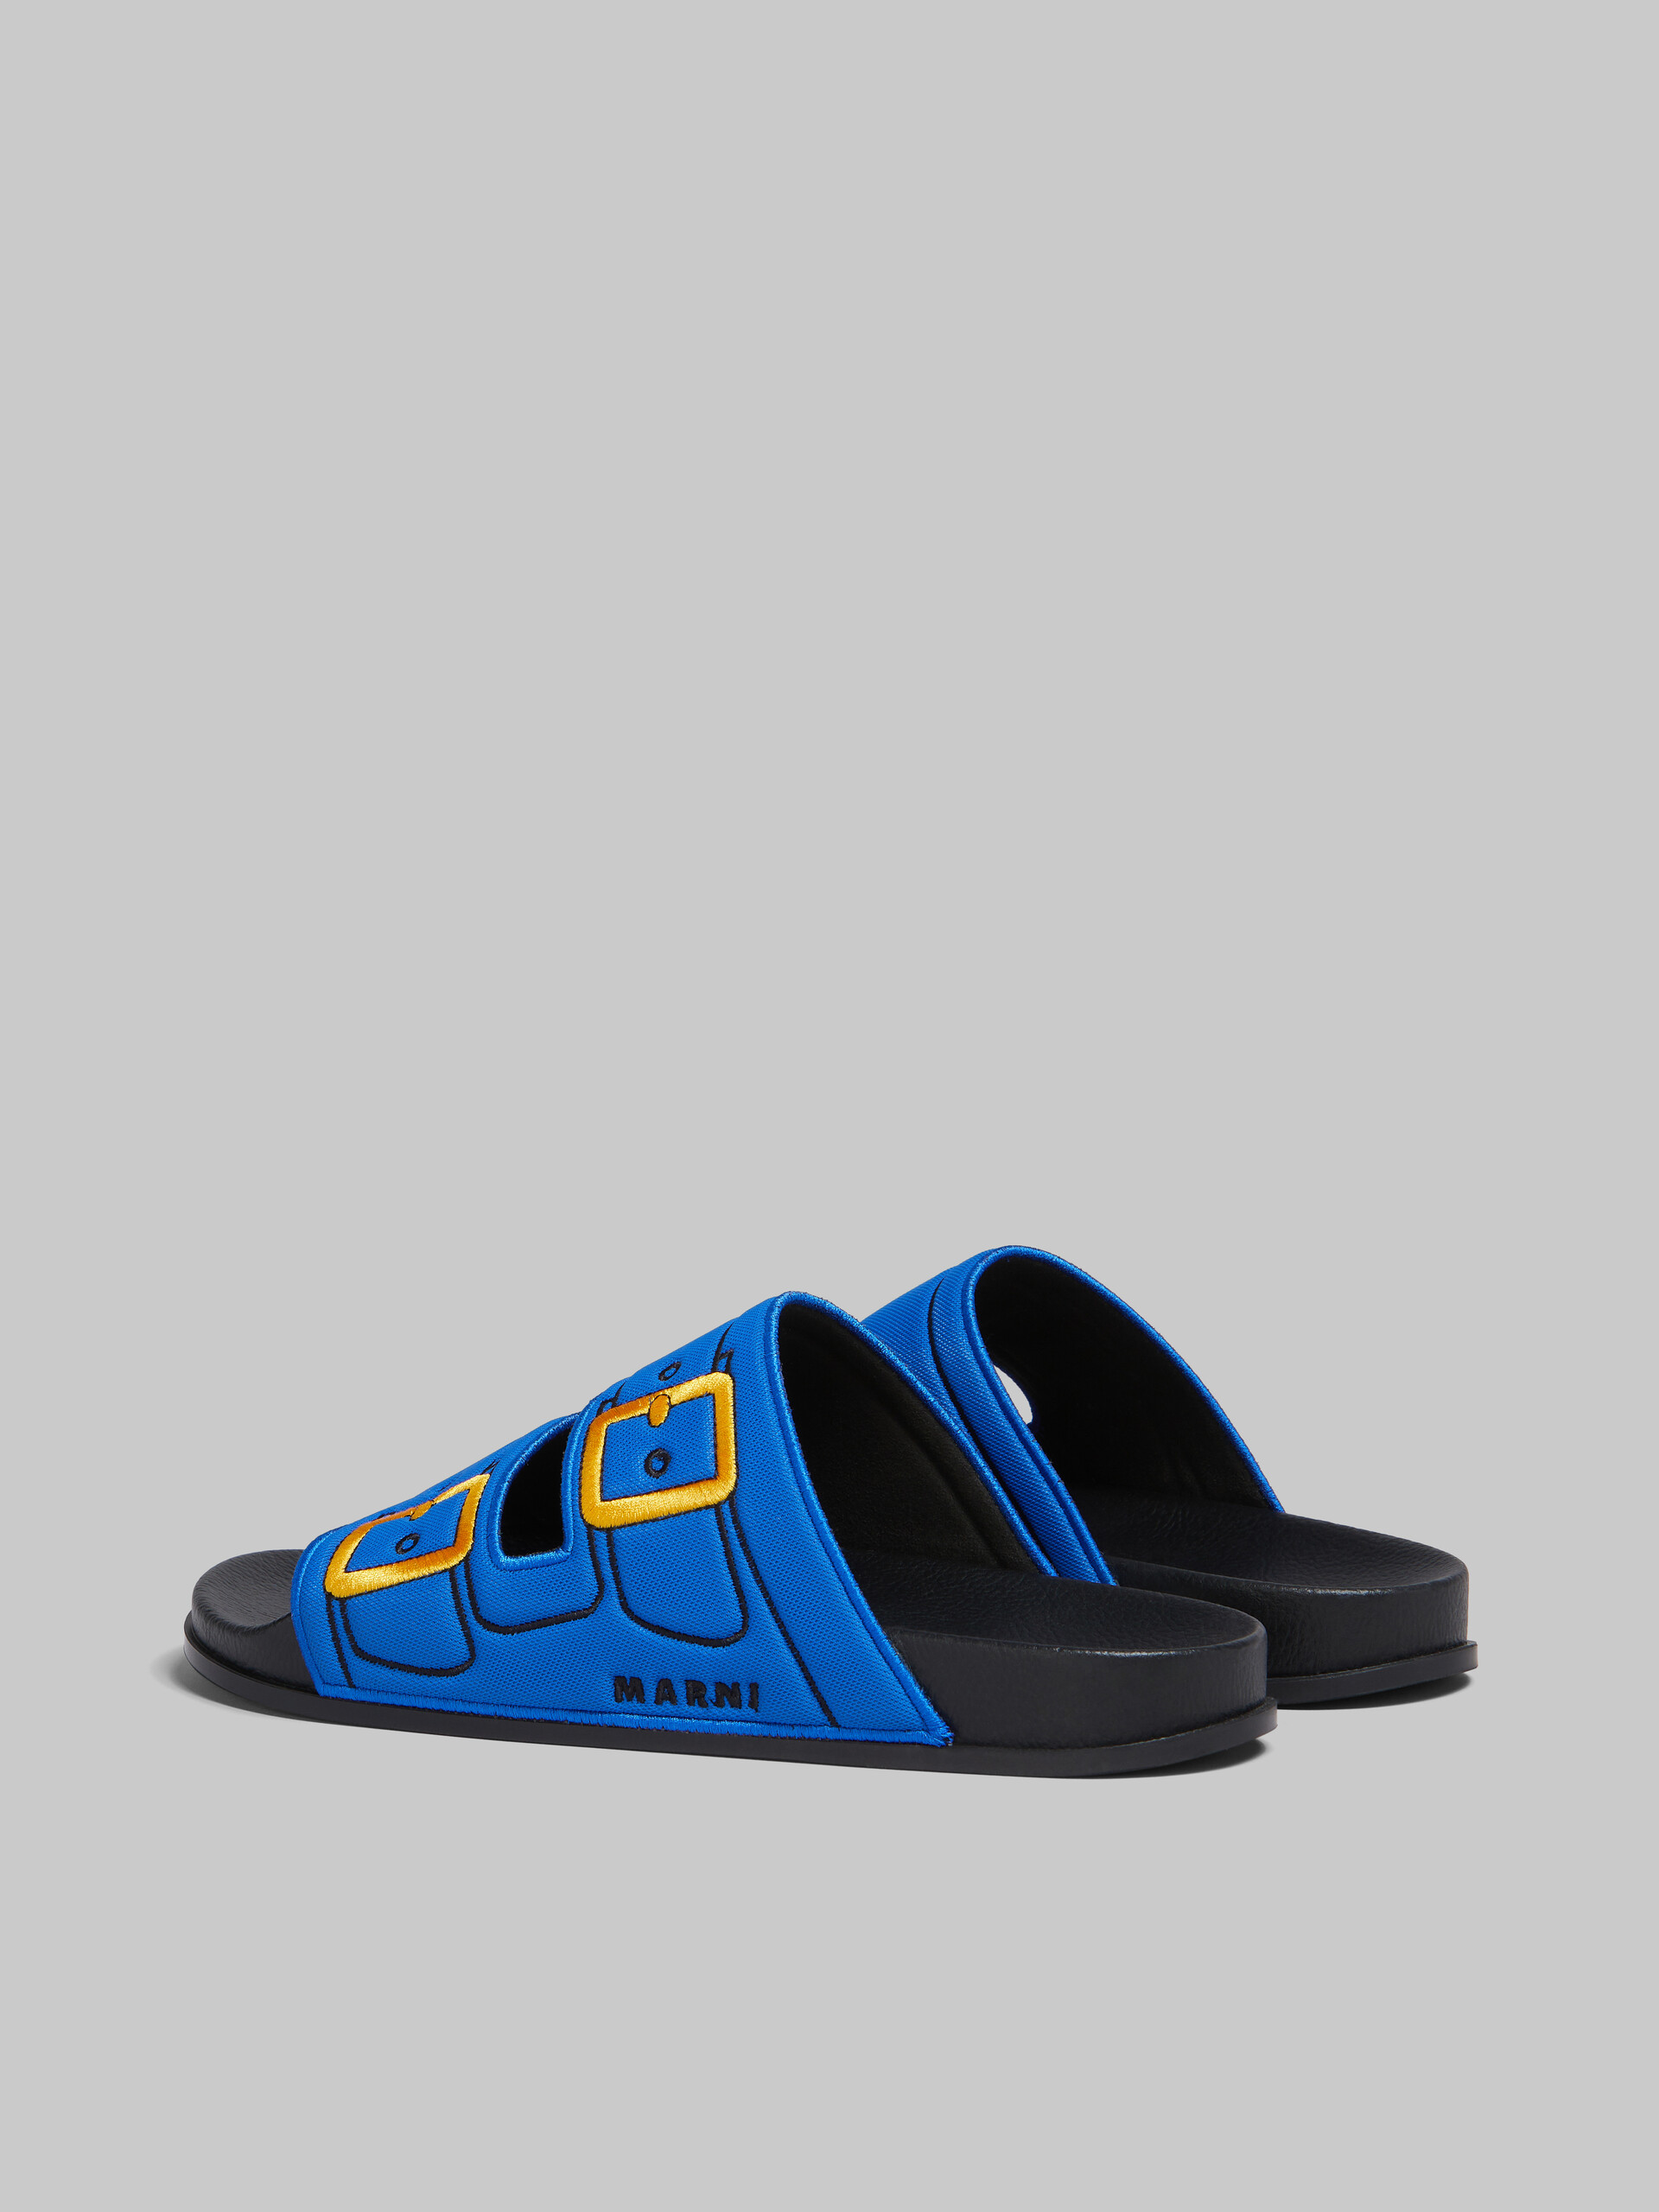 Sandalo blu trompe l'oeil con fibbie ricamate - Sandali - Image 3